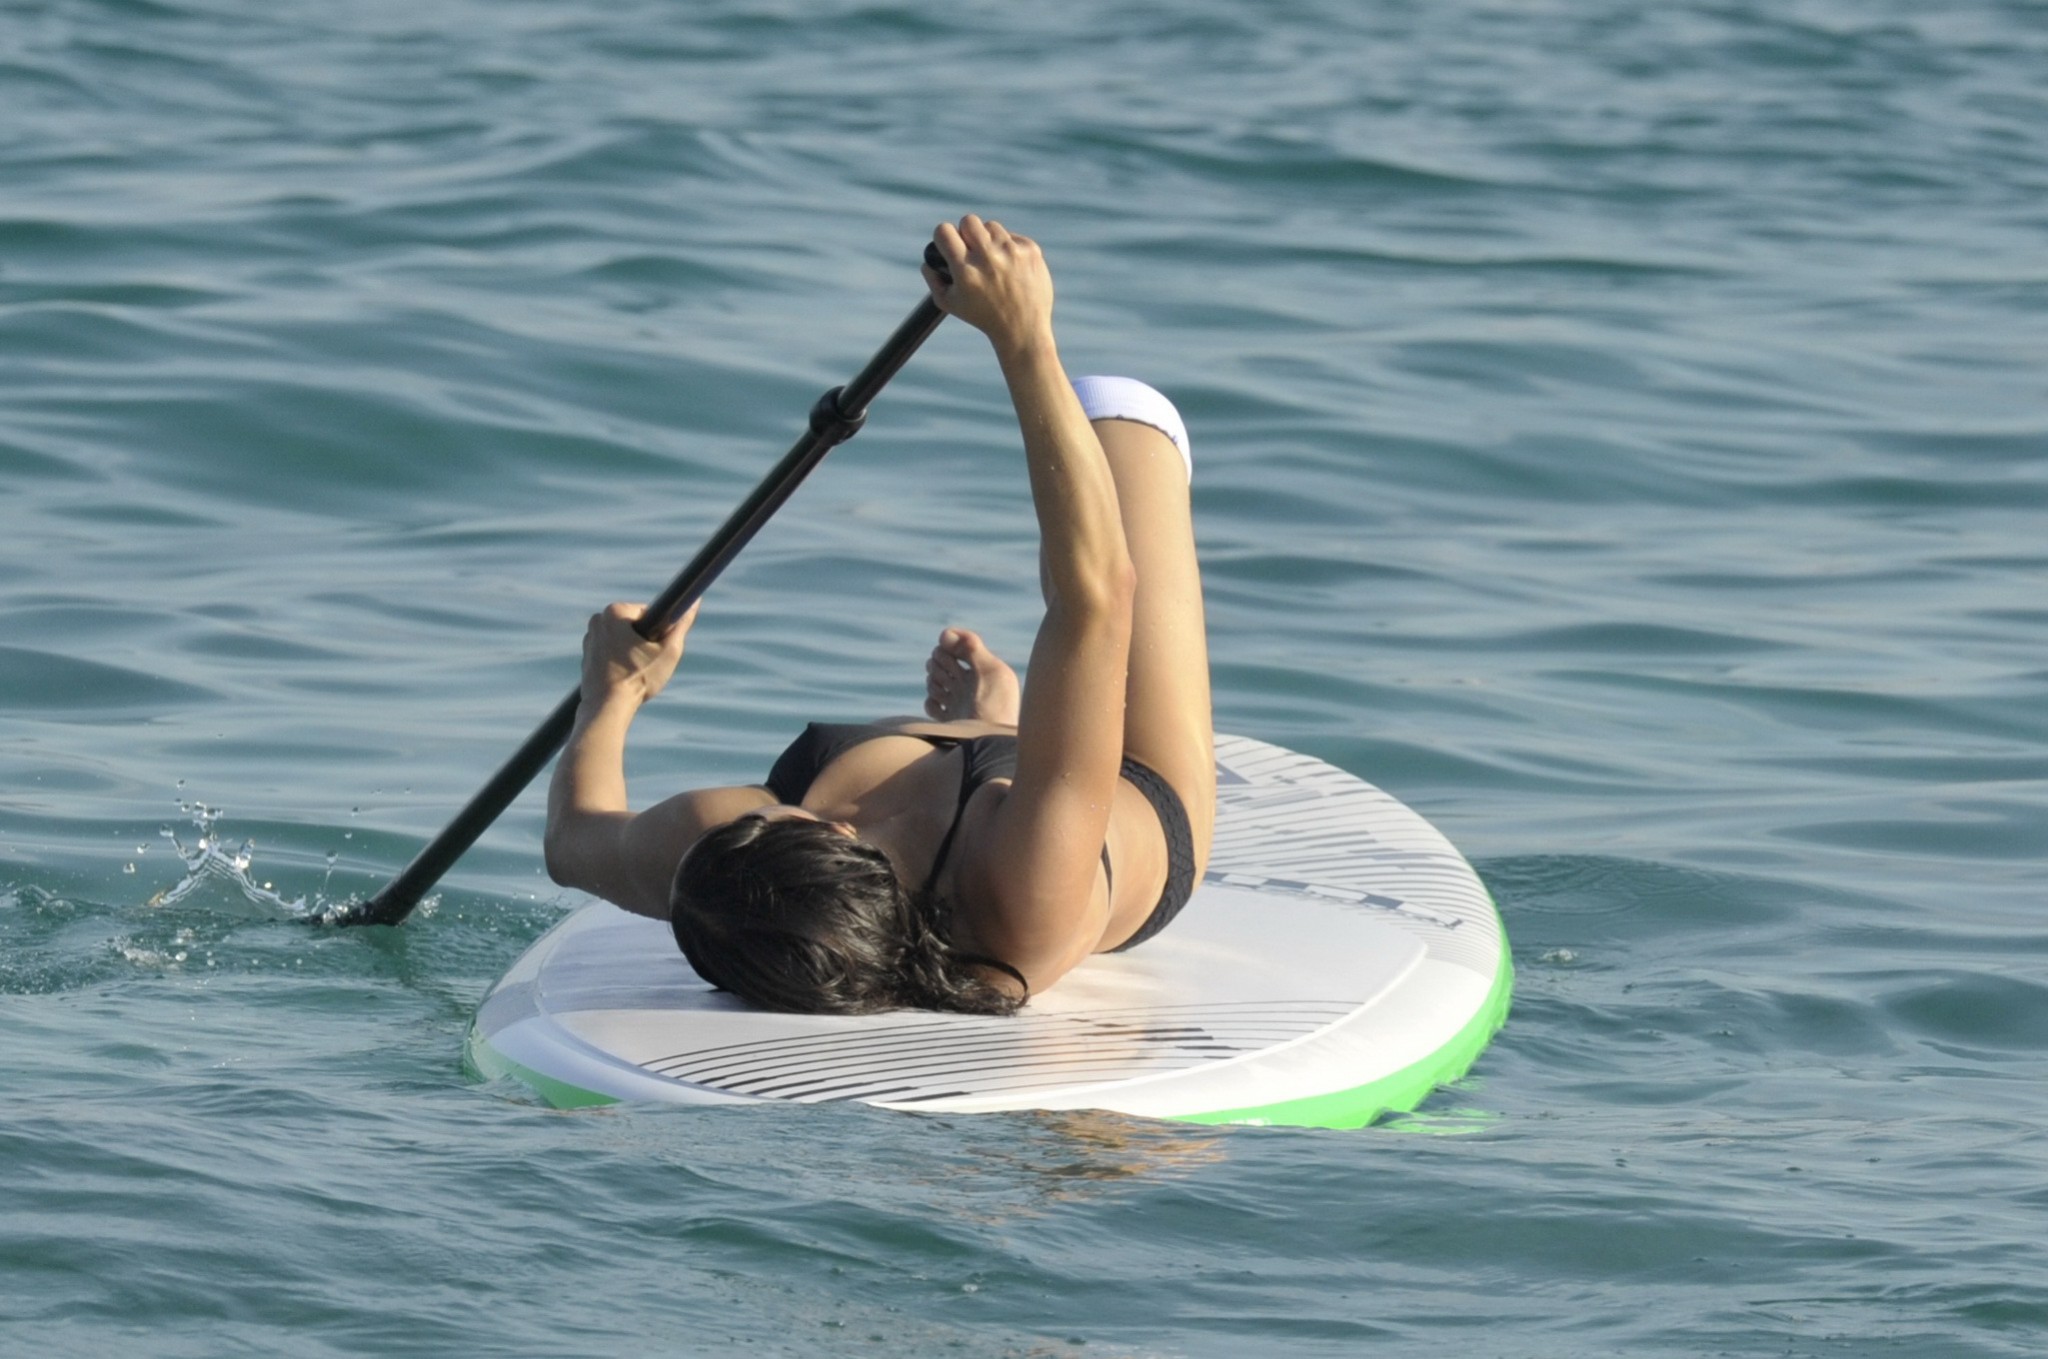 Michelle Rodriguez paddling in skimpy black bikini #75155820